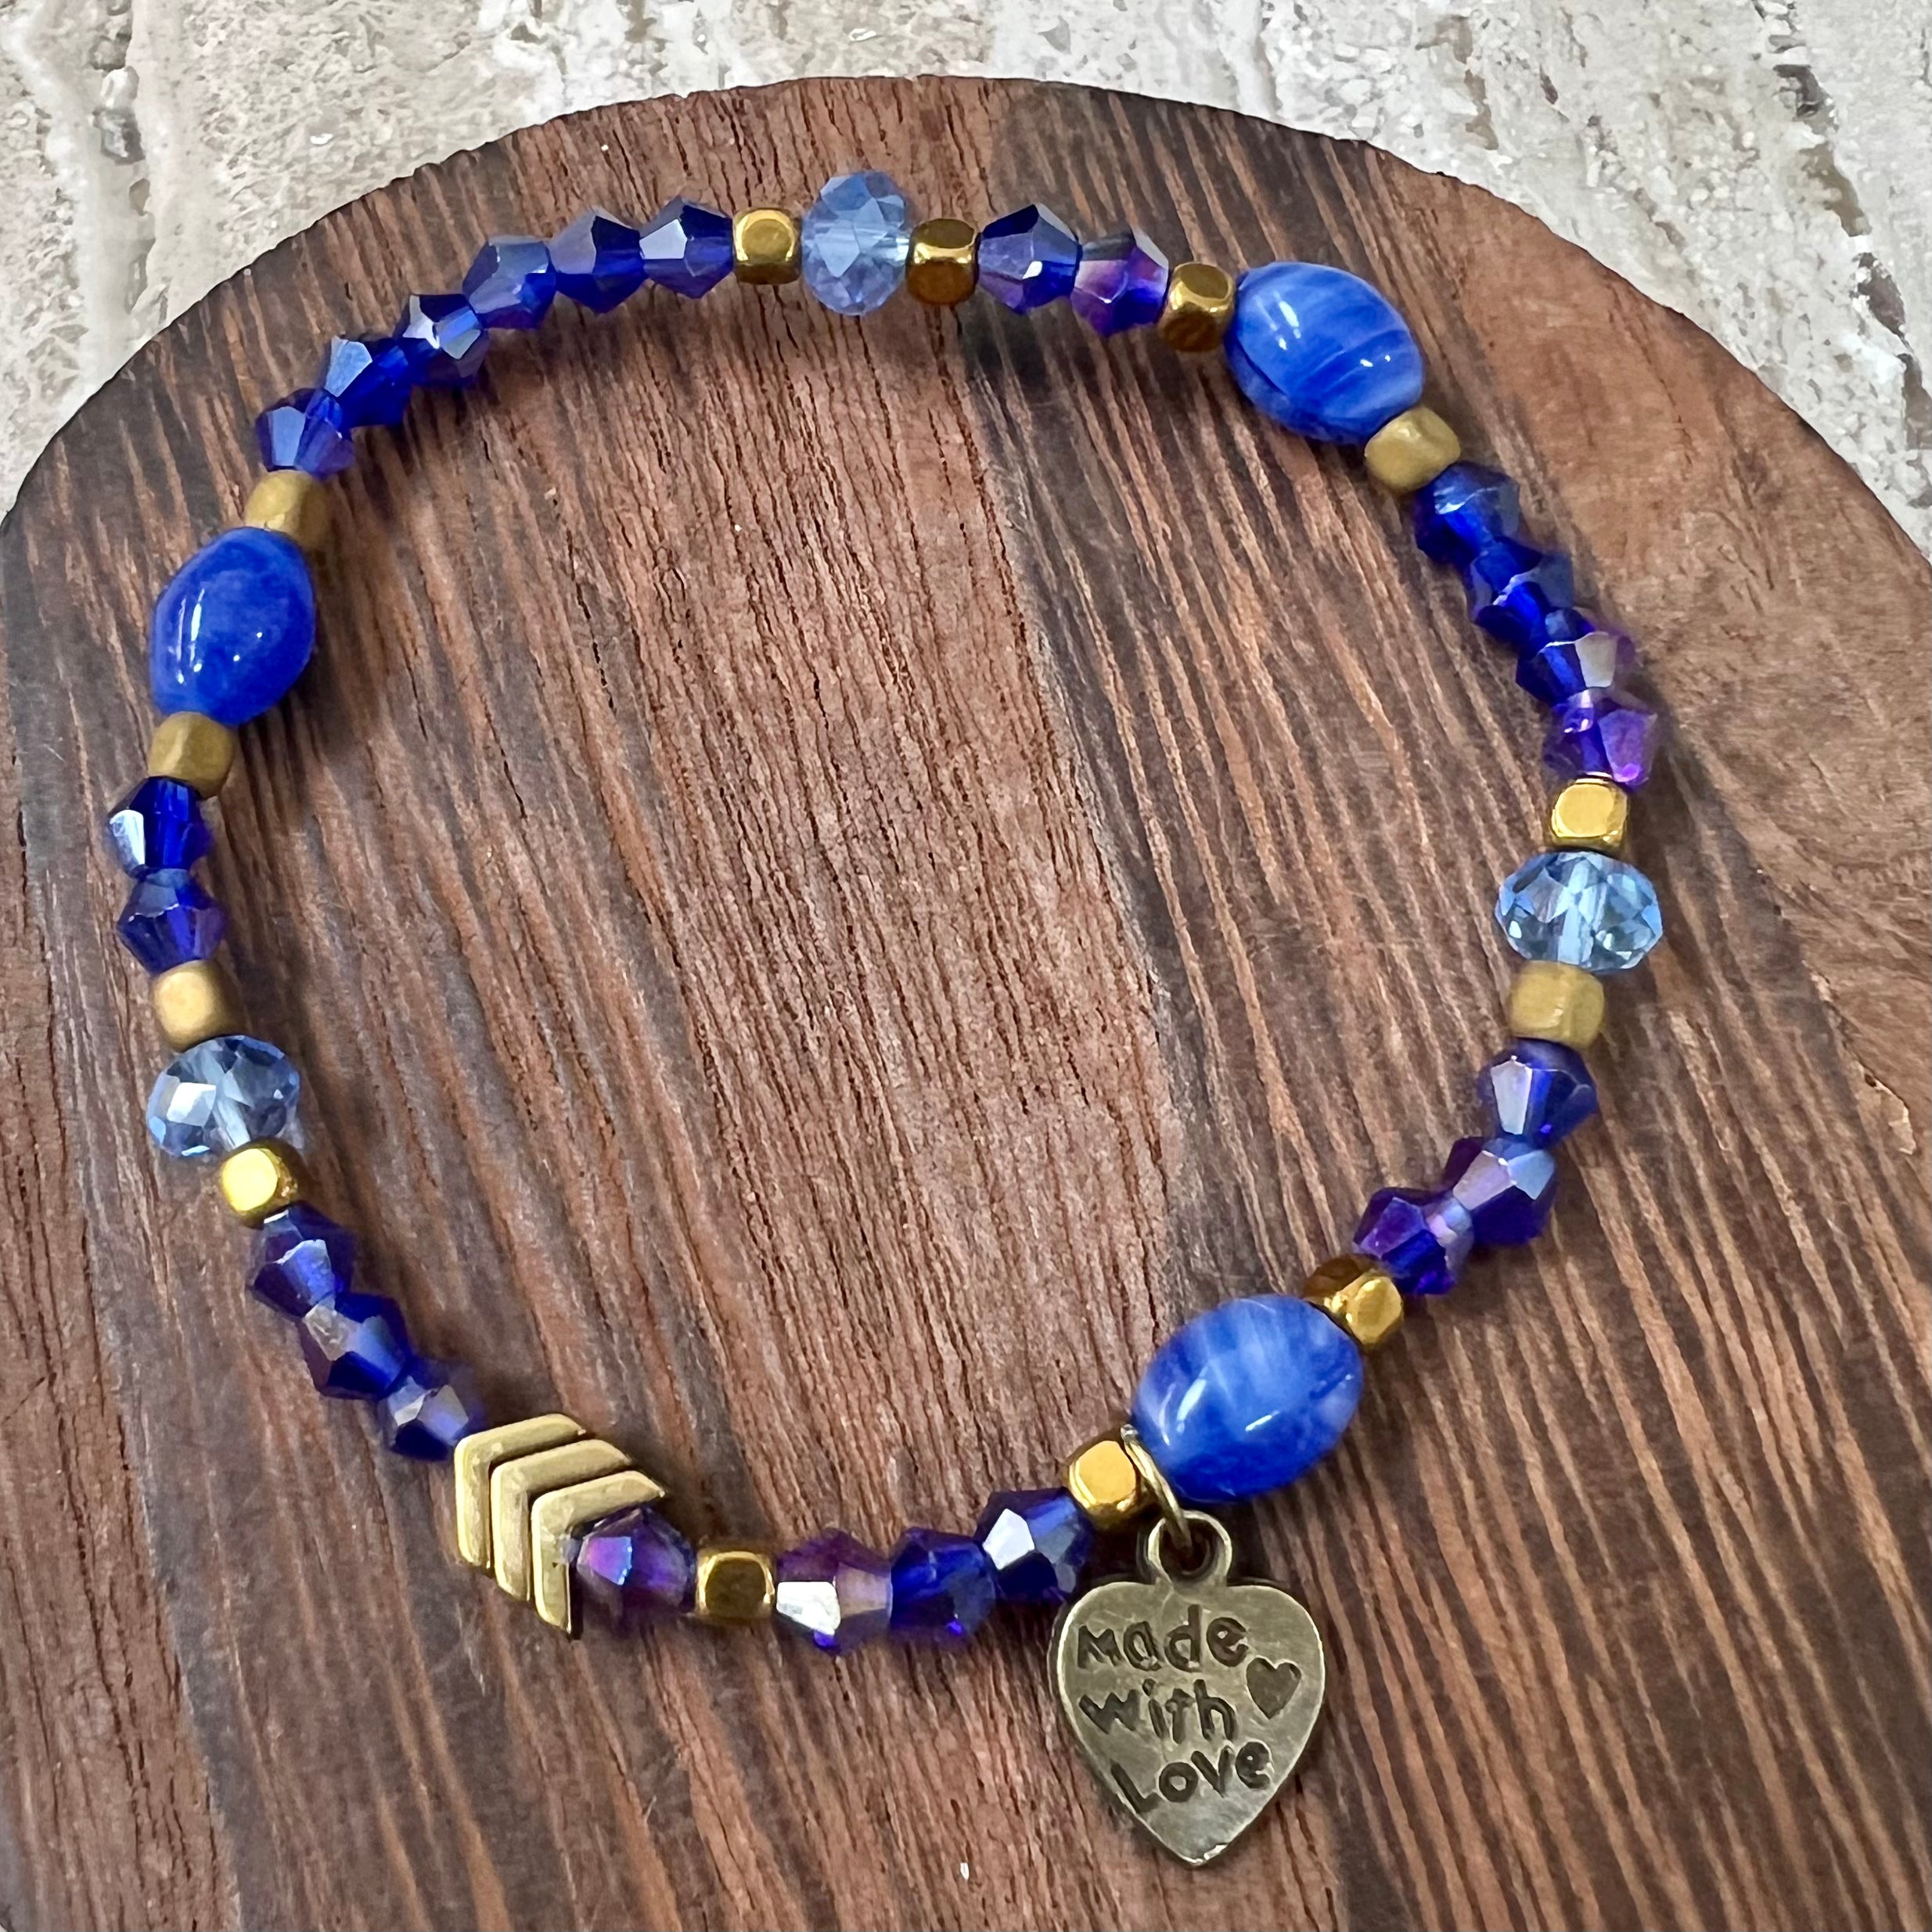 She Beads — M. Rahal Jewelers